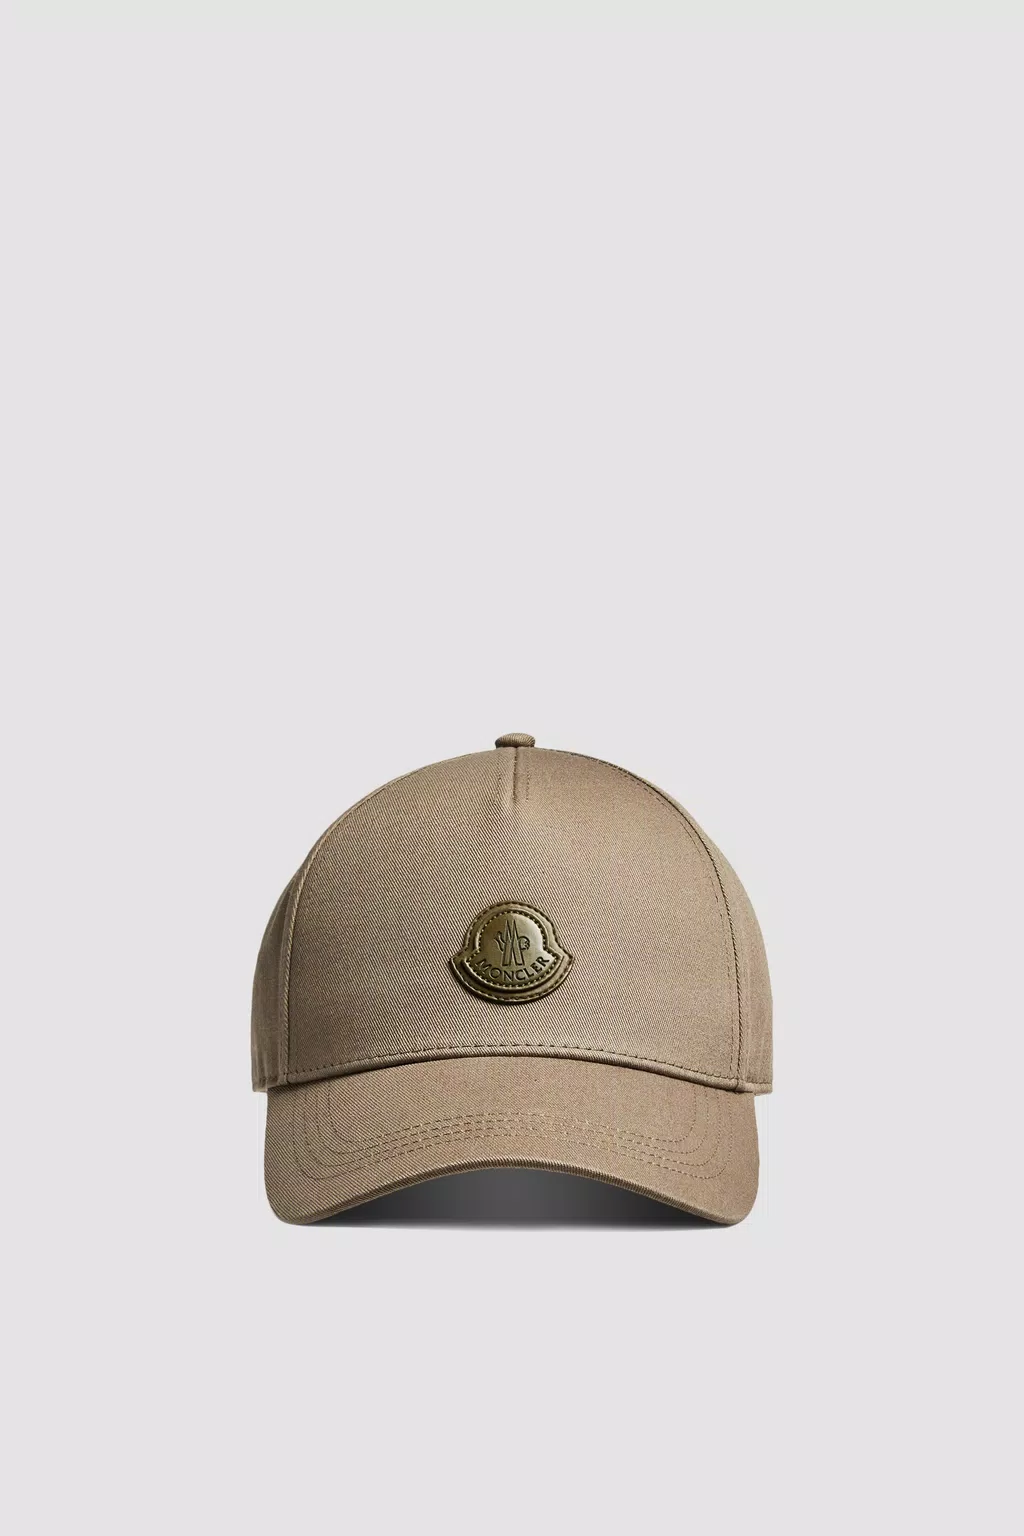 Baseball Caps Gray One Size Fishing Hats & Headwear for sale